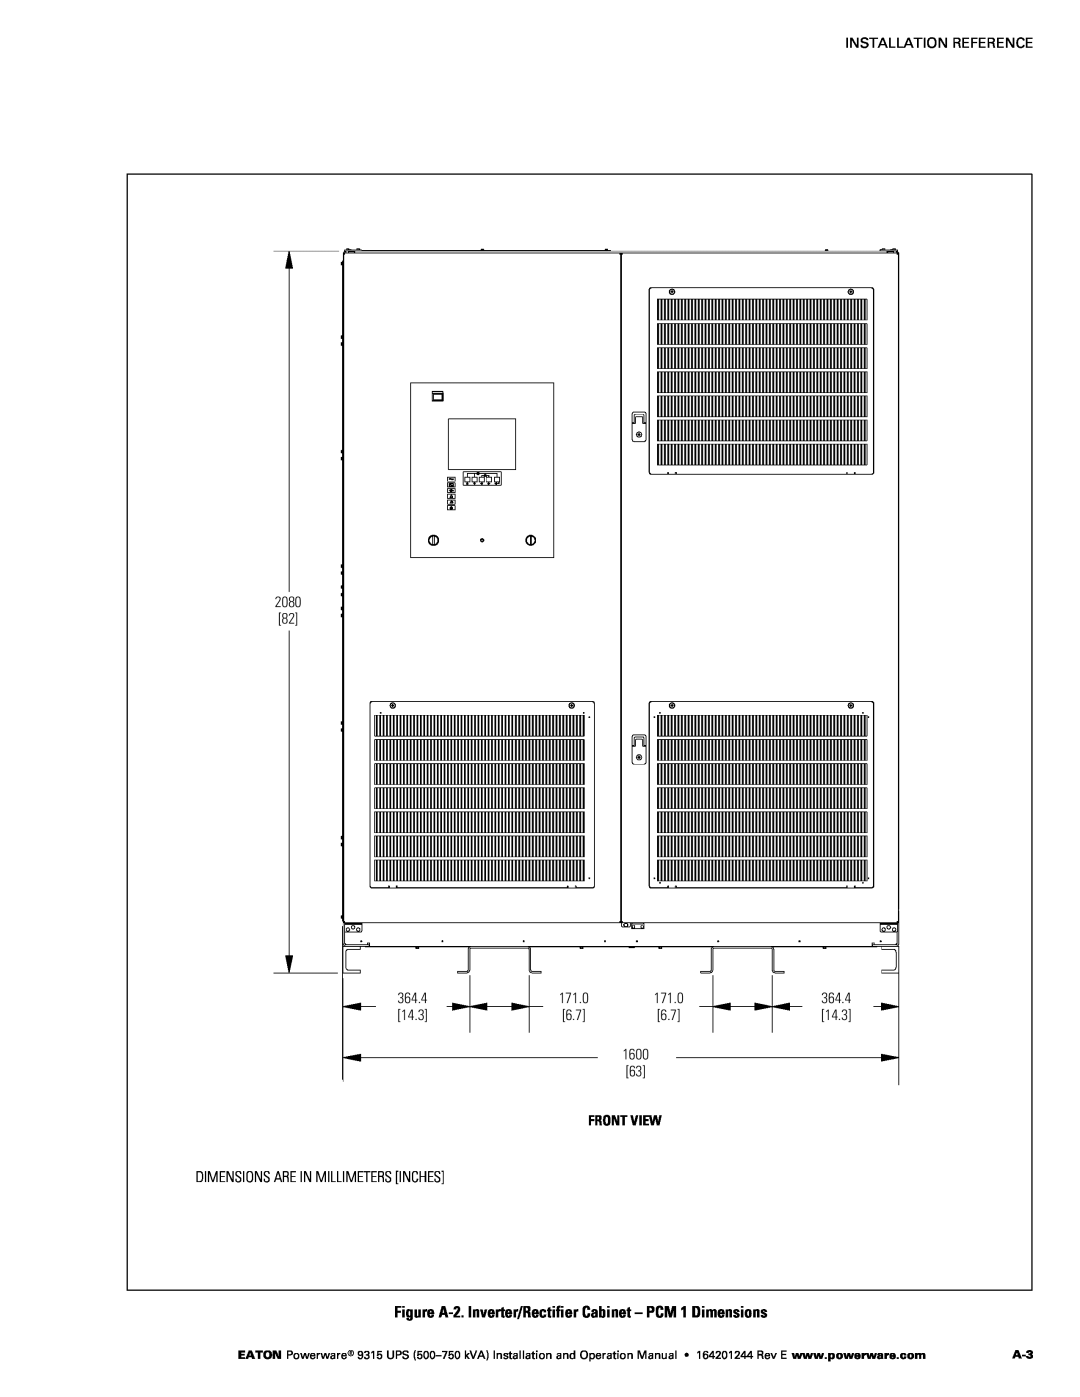 Powerware Powerware 9315 operation manual Figure A‐2. Inverter/Rectifier Cabinet - PCM 1 Dimensions, Front View 